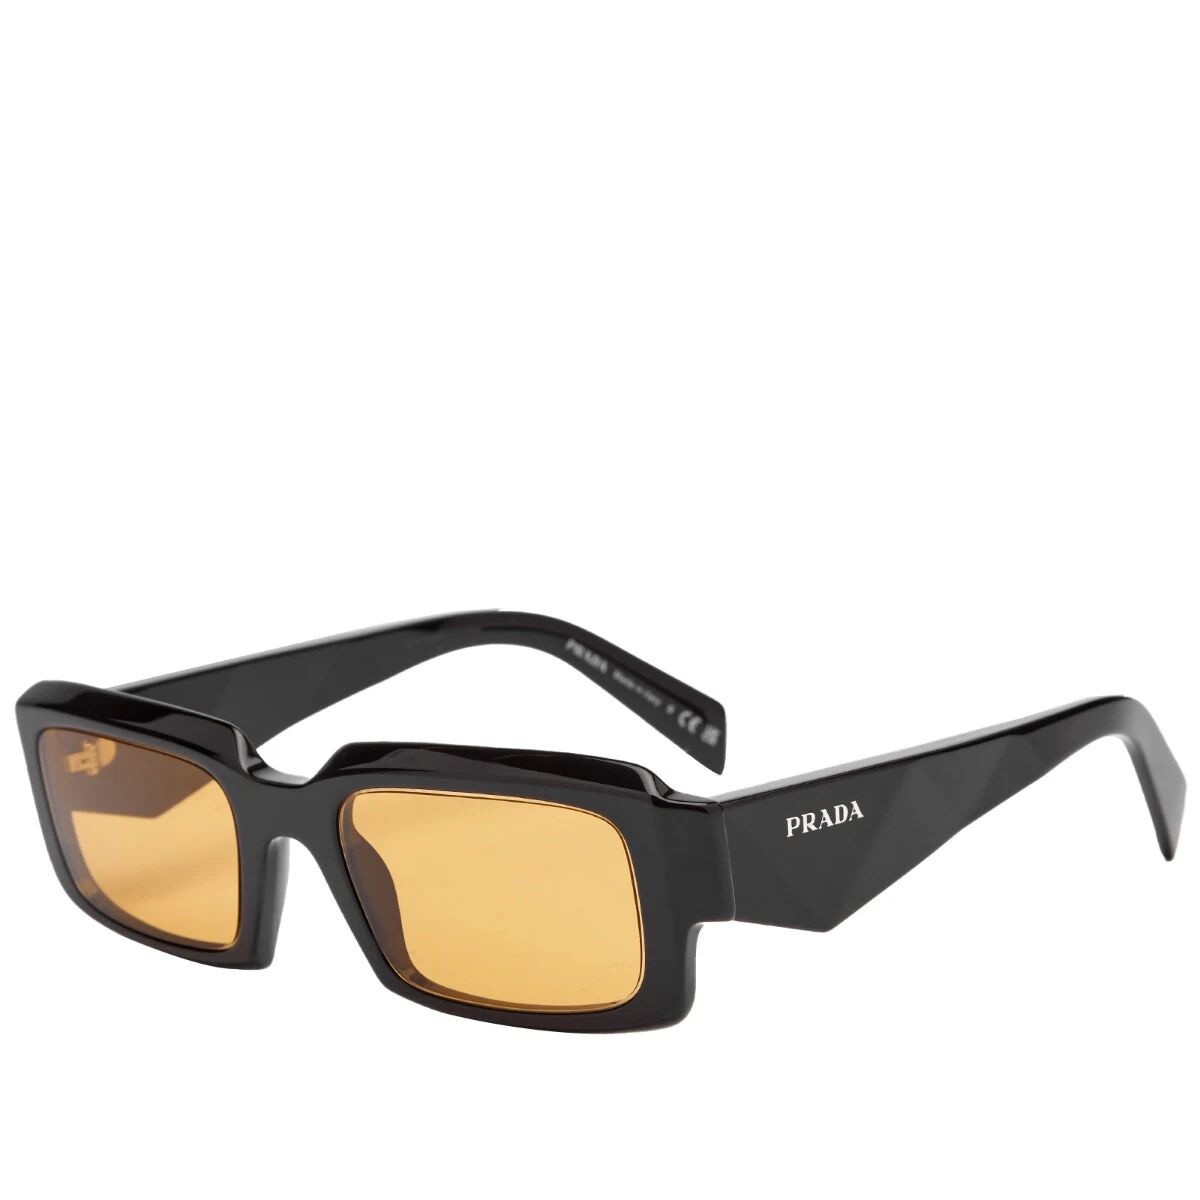 Prada Eyewear Men's PR 27ZS Sunglasses in Black/Yellow